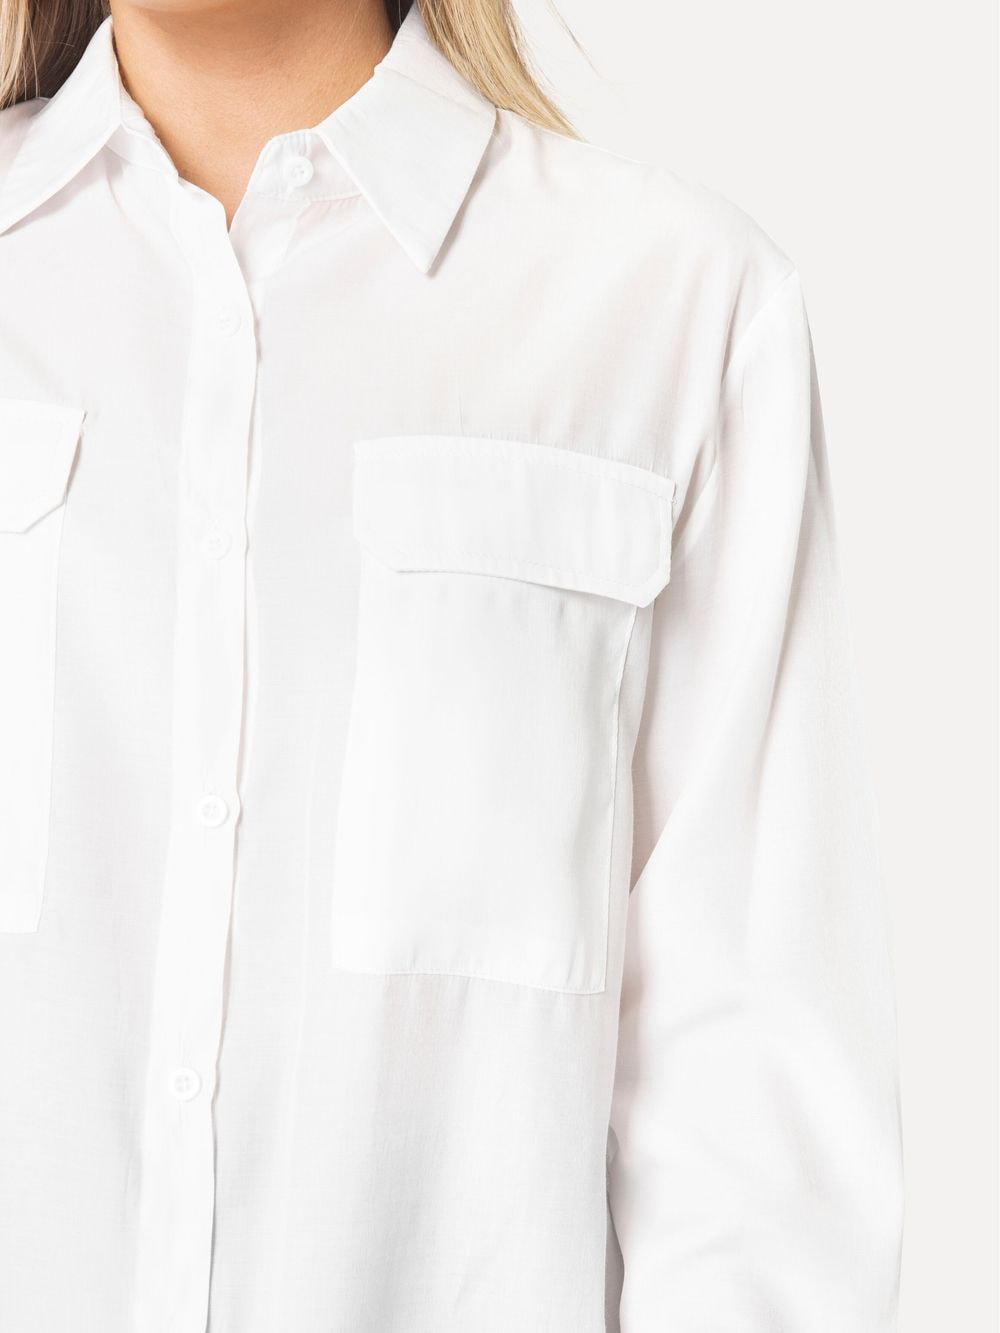 Collar Shirt in White